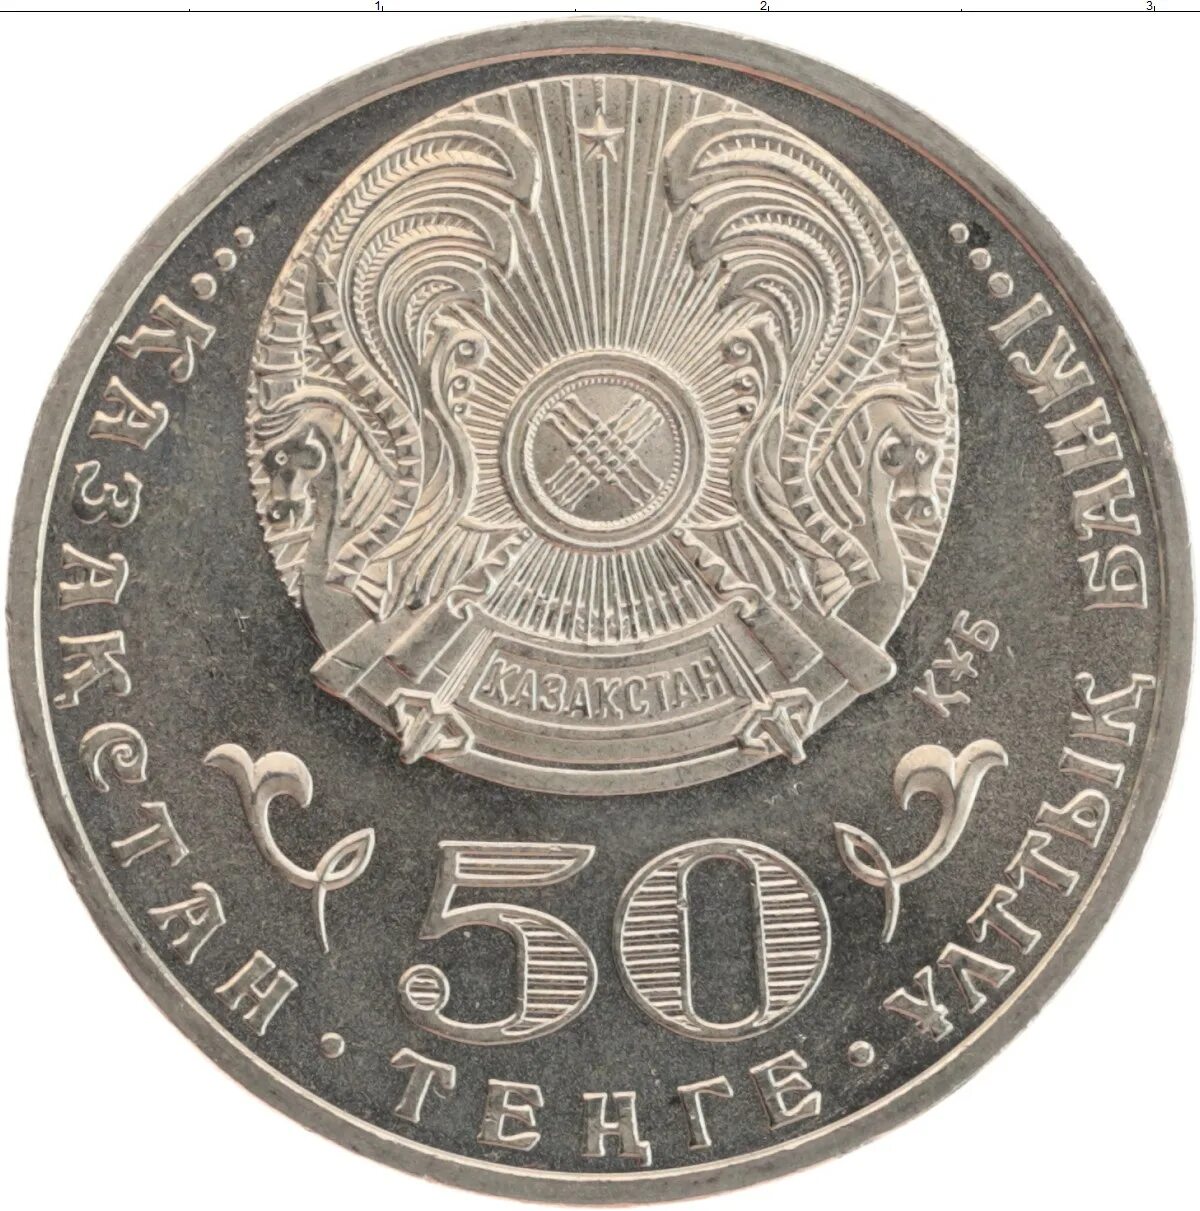 50 тенге это сколько. Монеты Казахстана 50 тенге. Монета. Казахстан 50 тенге Кунаев. 50 Тенге 2004 год Кастеев. Монета Казахстана 1992.